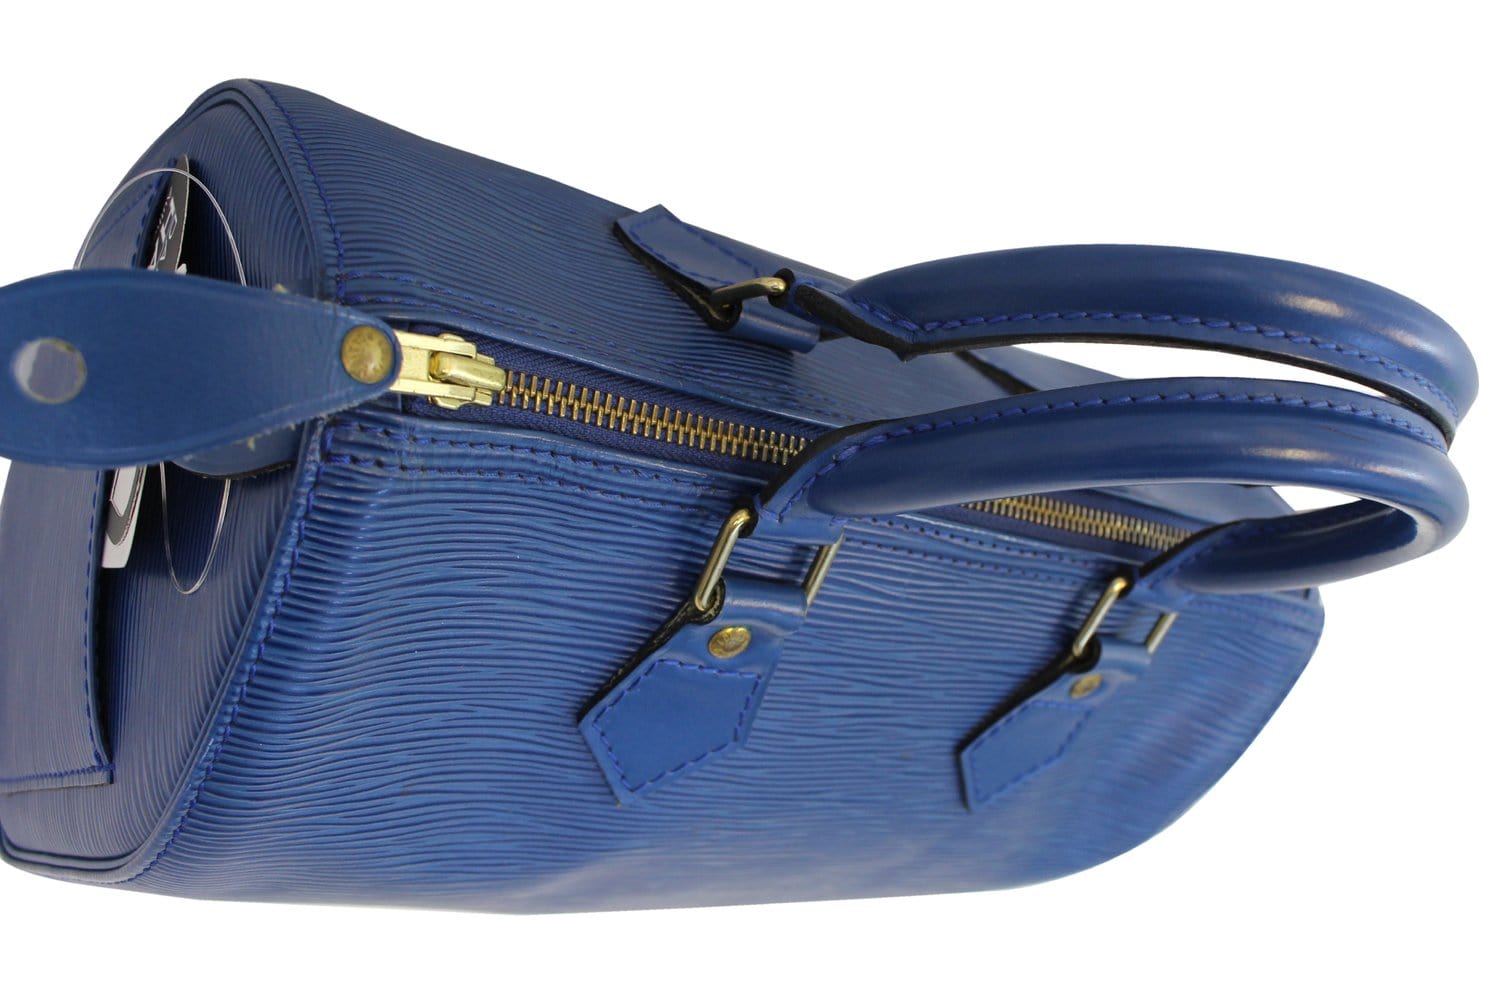 LOUIS VUITTON LV Speedy 25 Blue Epi Leather Boston HandBag Purse Good  Condition